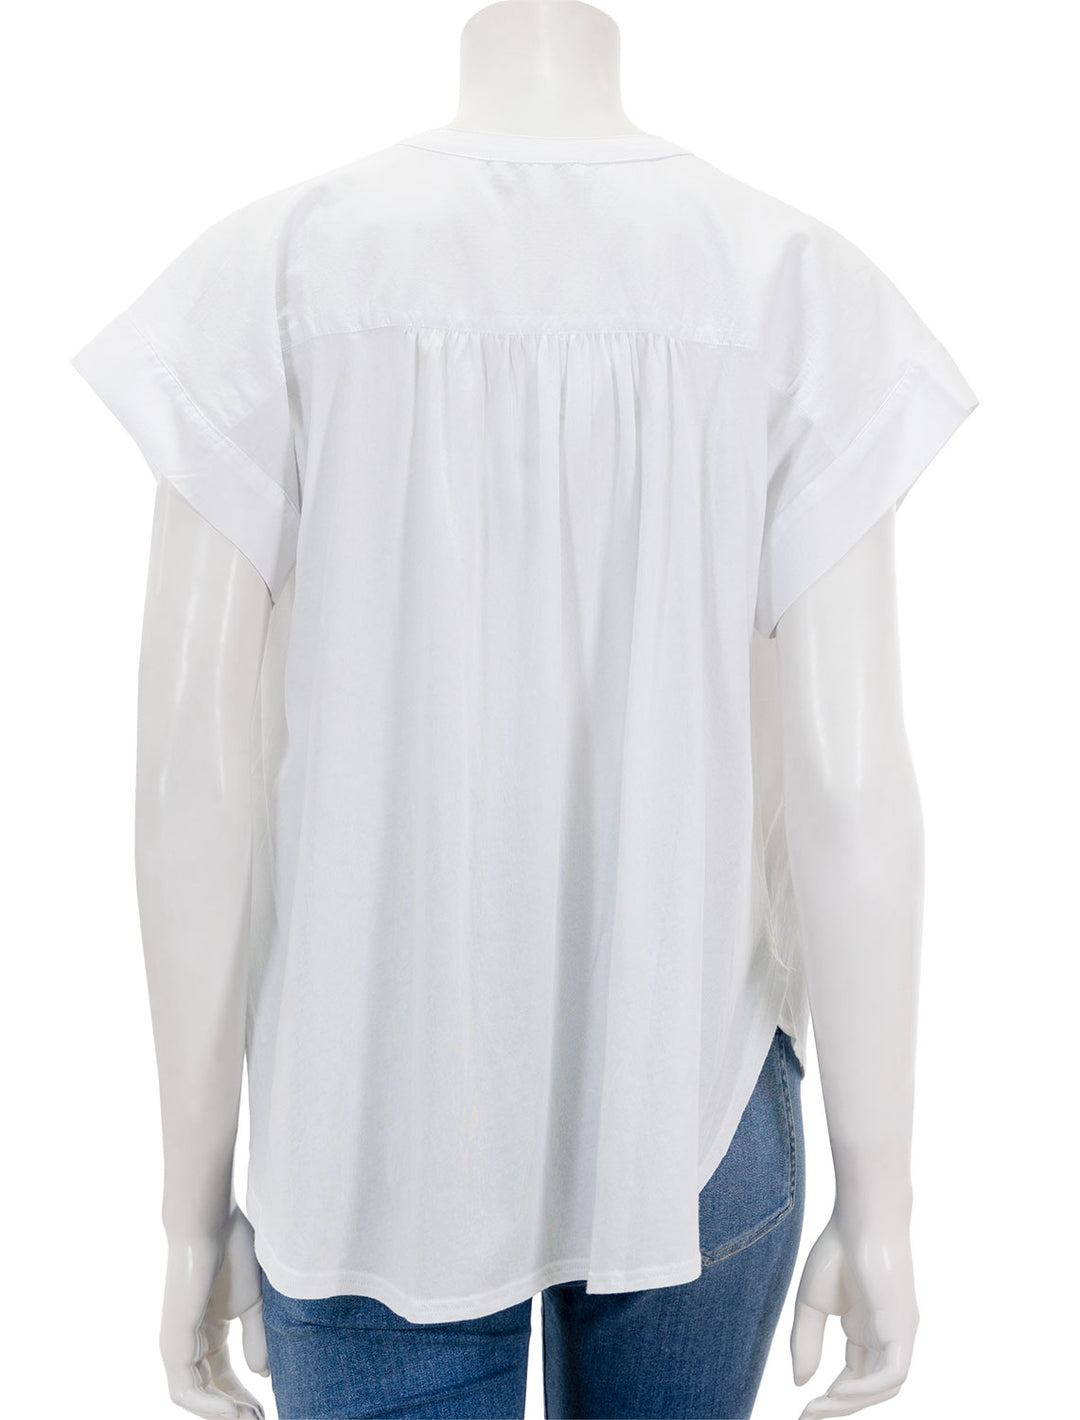 Back view of Splendid's paloma blouse in white.